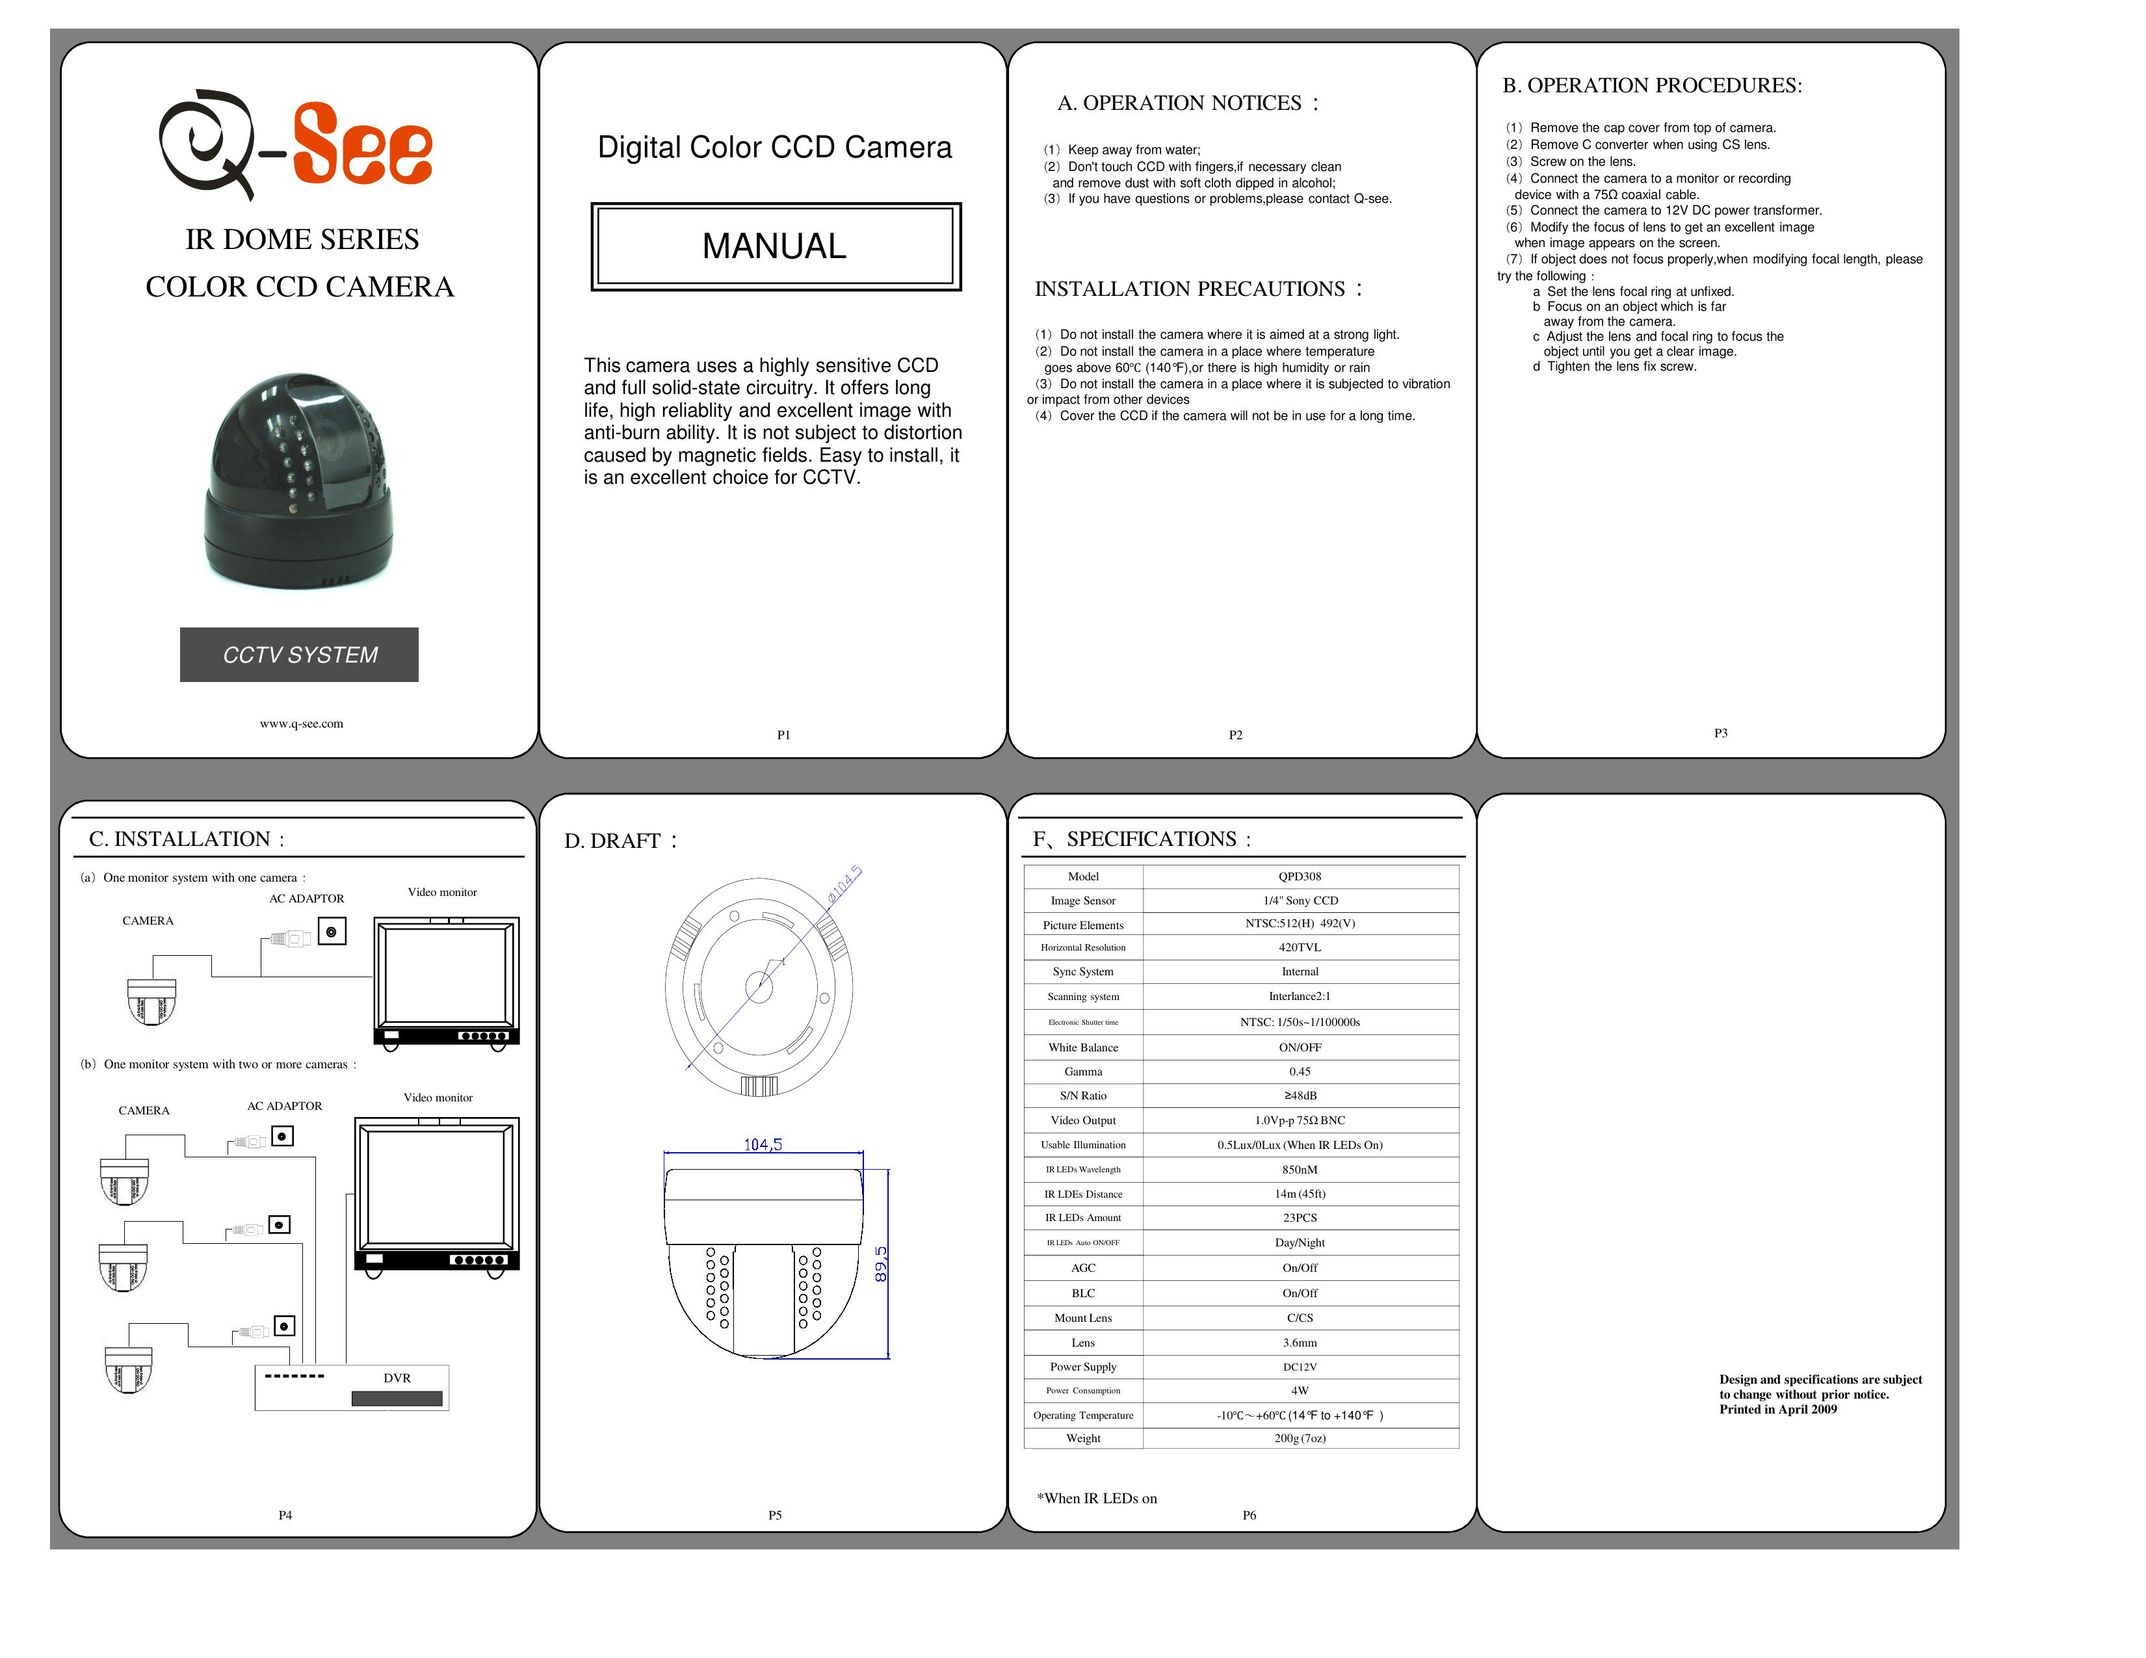 Q-See IR Dome Series Model Vehicle User Manual